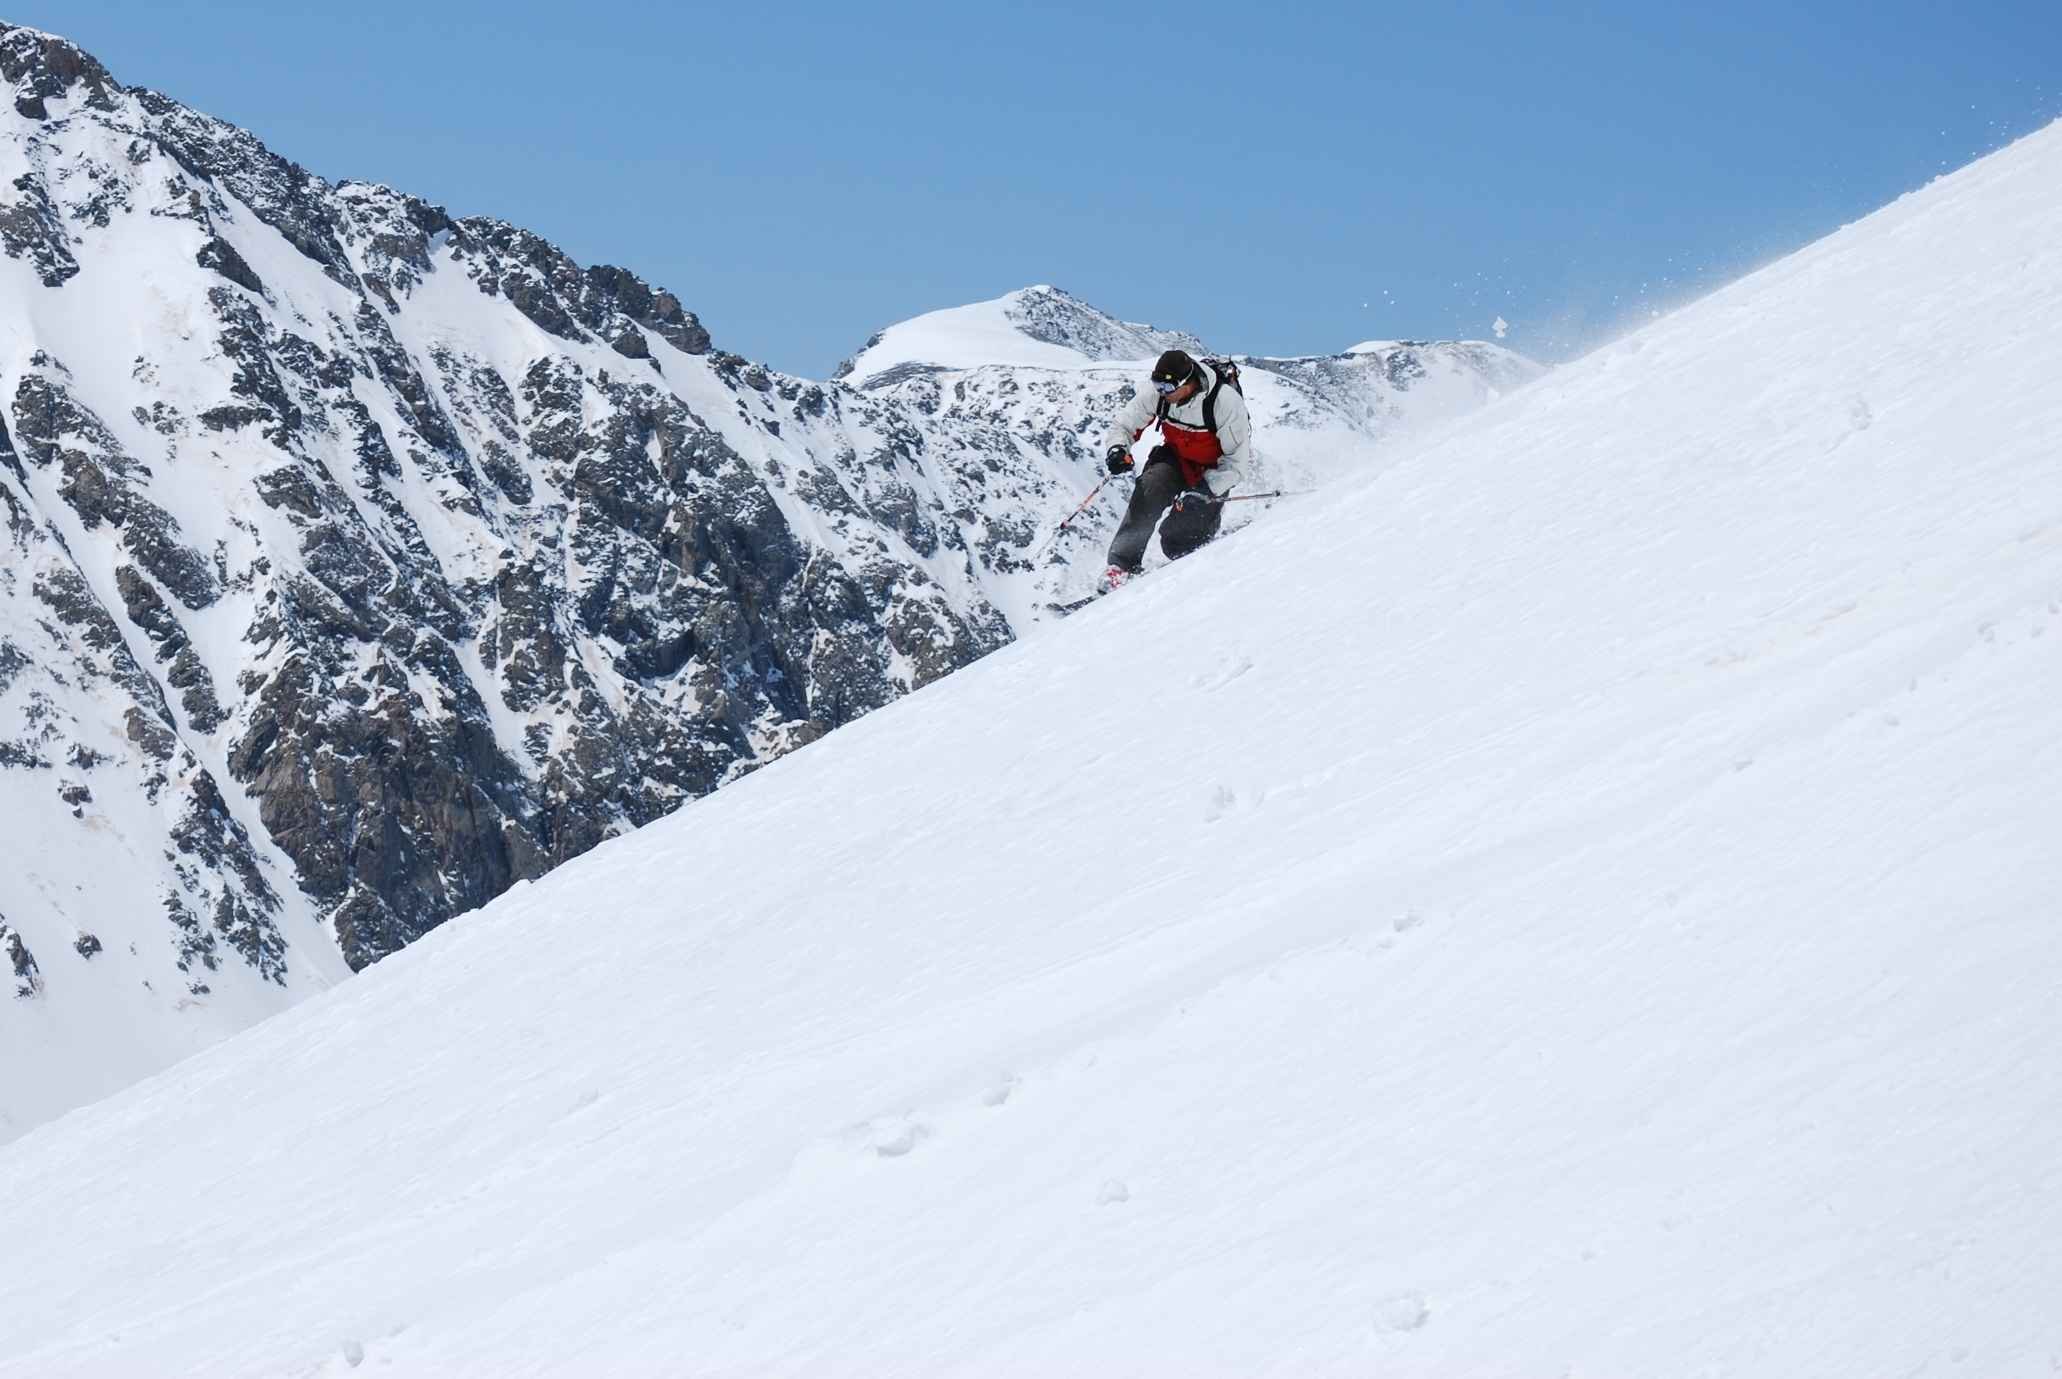 Boot Fitting Supply crew member telemark skiing down 14,265’ Quandary Peak in Colorado.